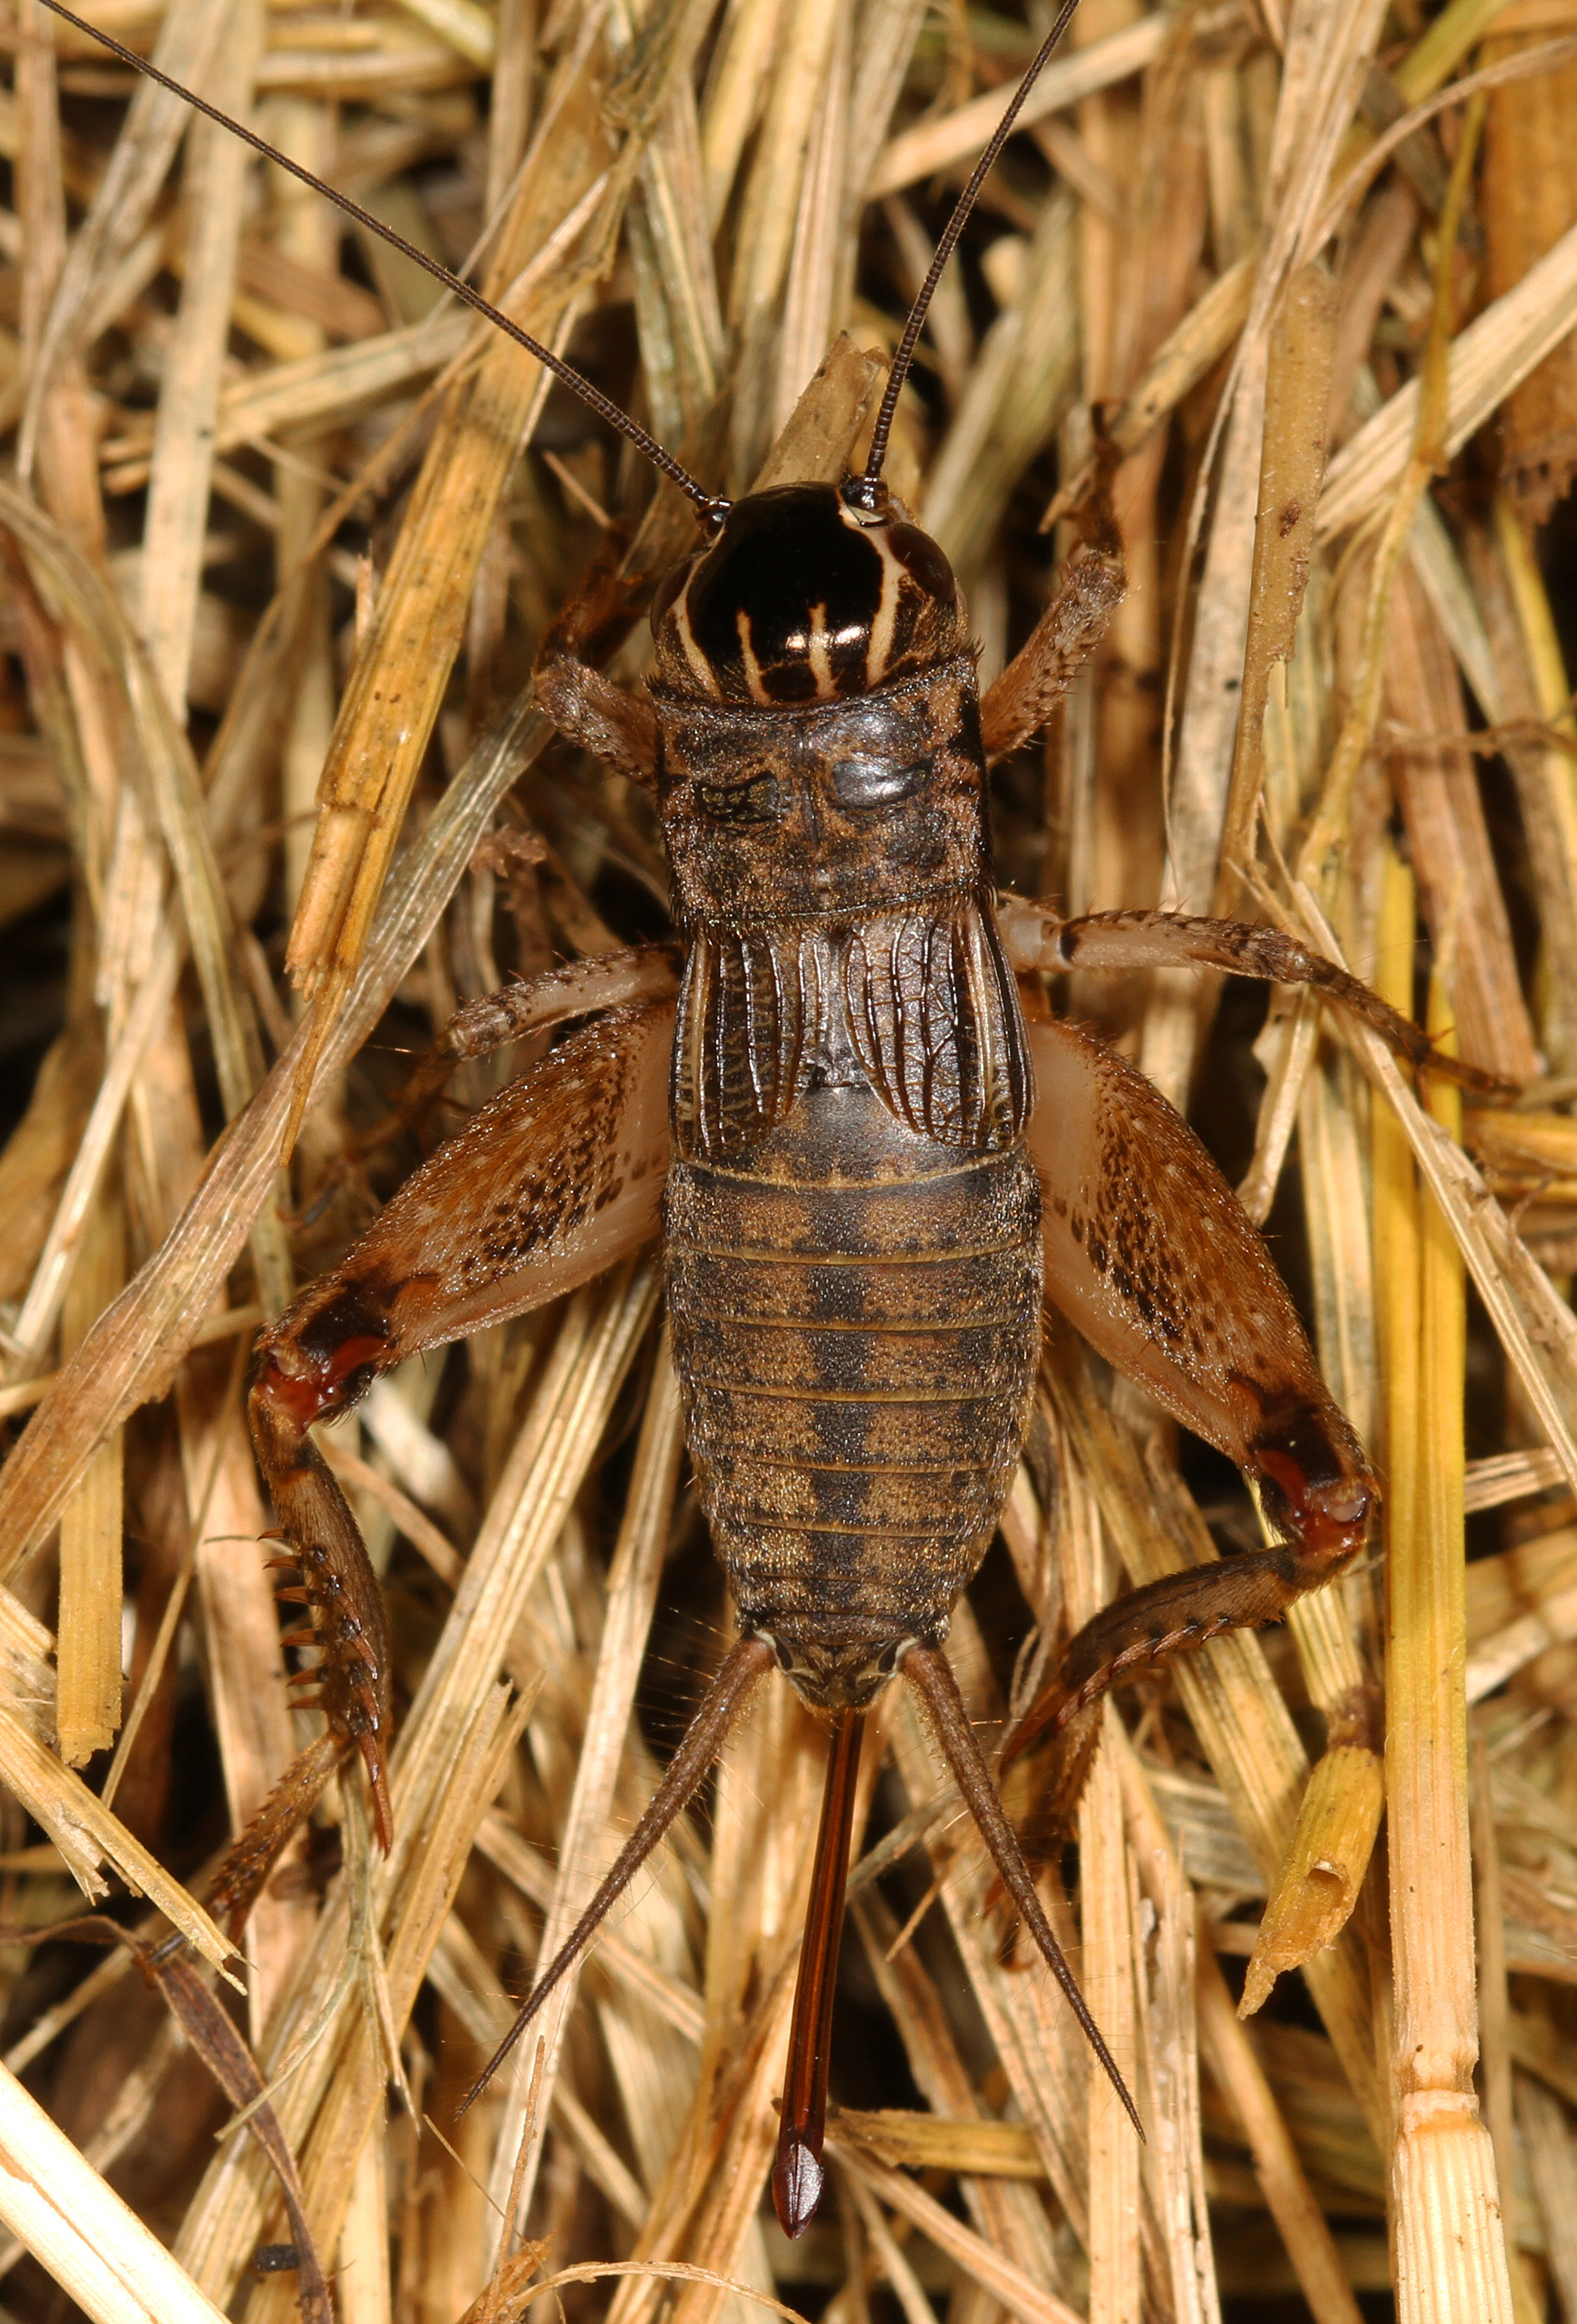 Eastern Striped Cricket - Miogryllus saussurei, Merrimac Farm Wildlife Management Area, Aden, Virginia